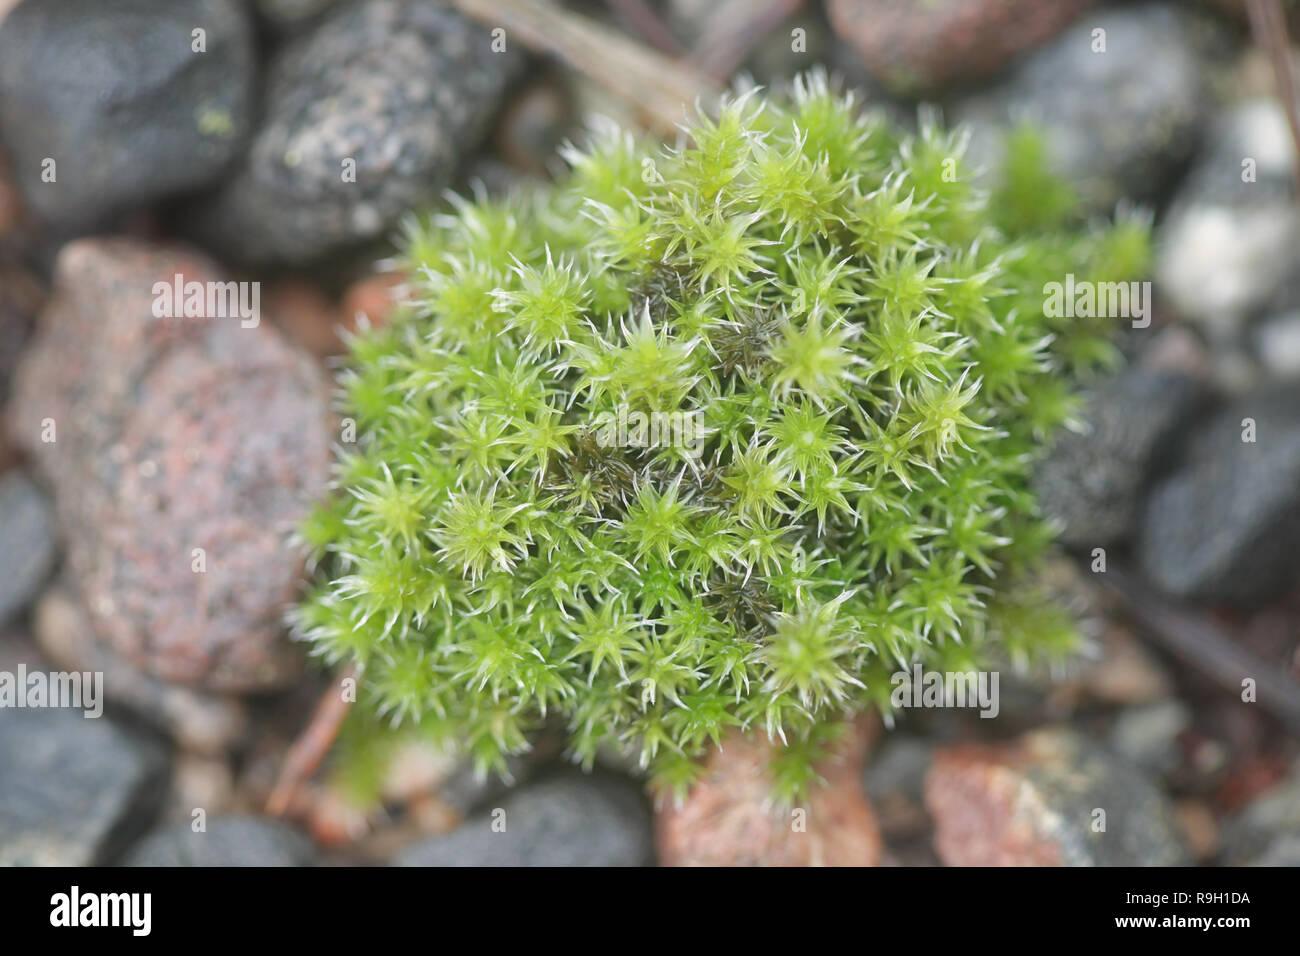 silver-moss-or-hoary-fringe-moss-racomitrium-canescens-R9H1DA.jpg